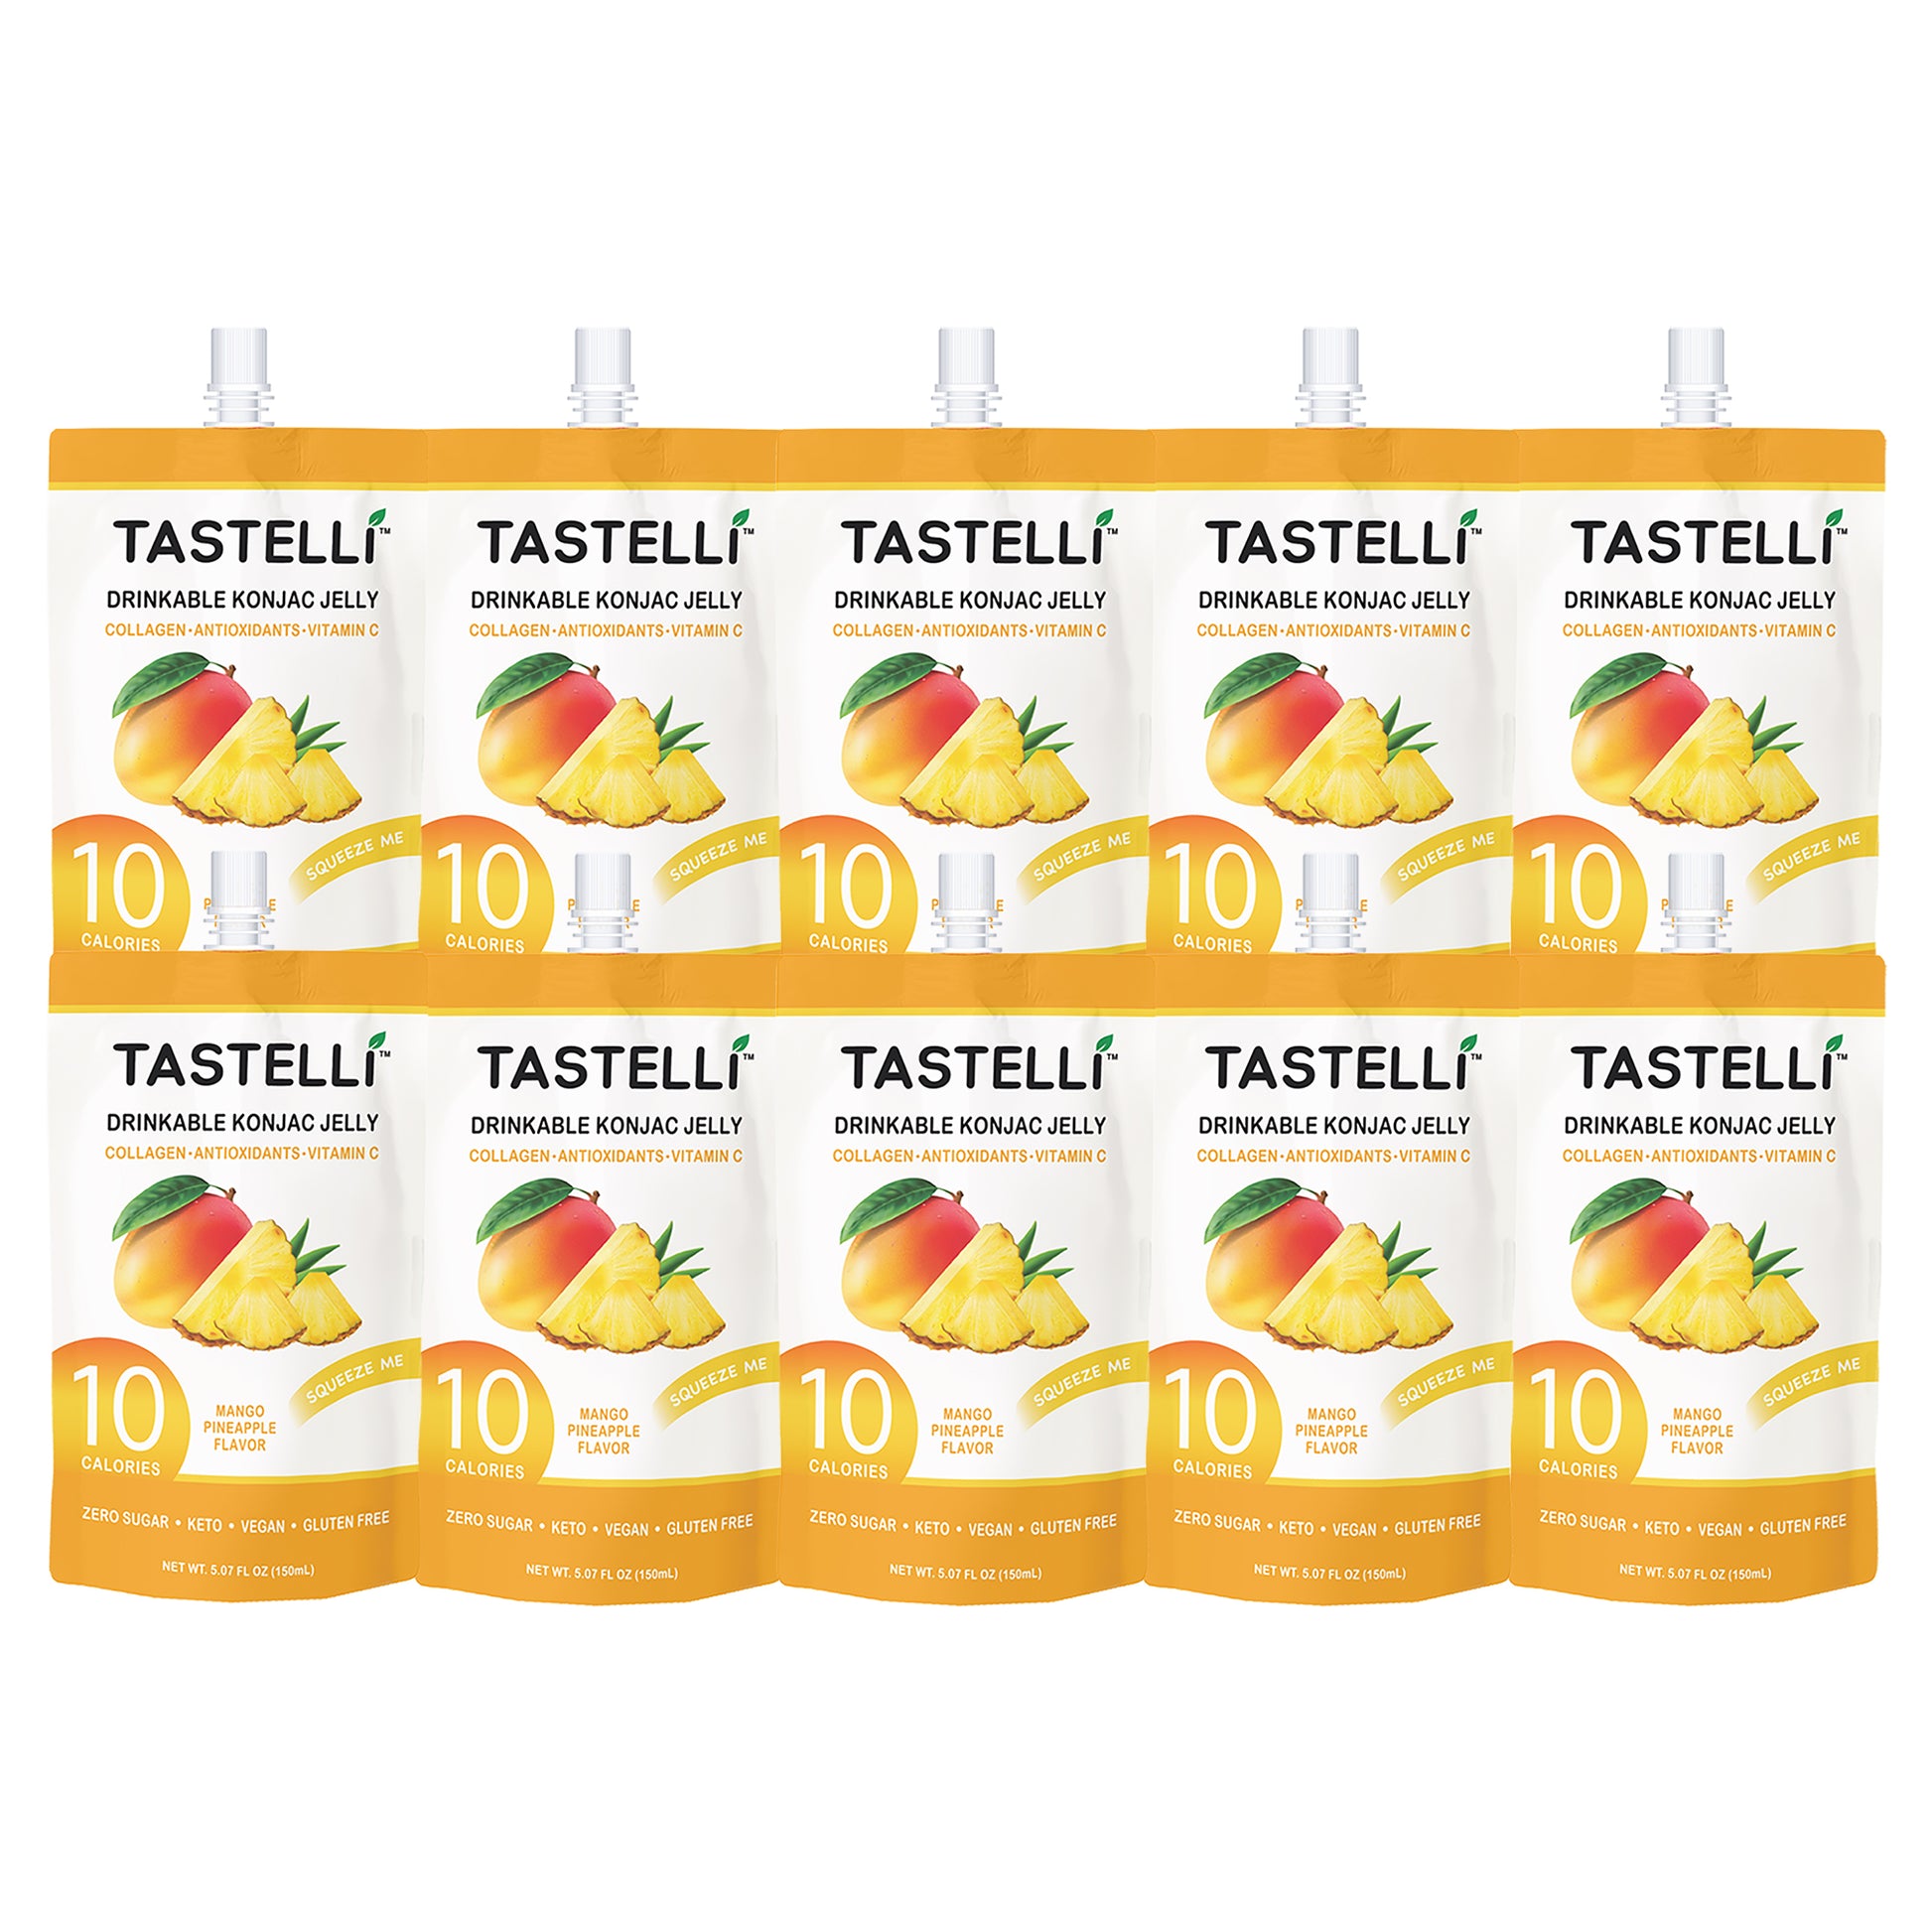 Tastelli Konjac Jelly - 3-Flavor Variety Pack Konjac Jelly | 3 Cases (30 Units) - Tastelli Konjac Jelly